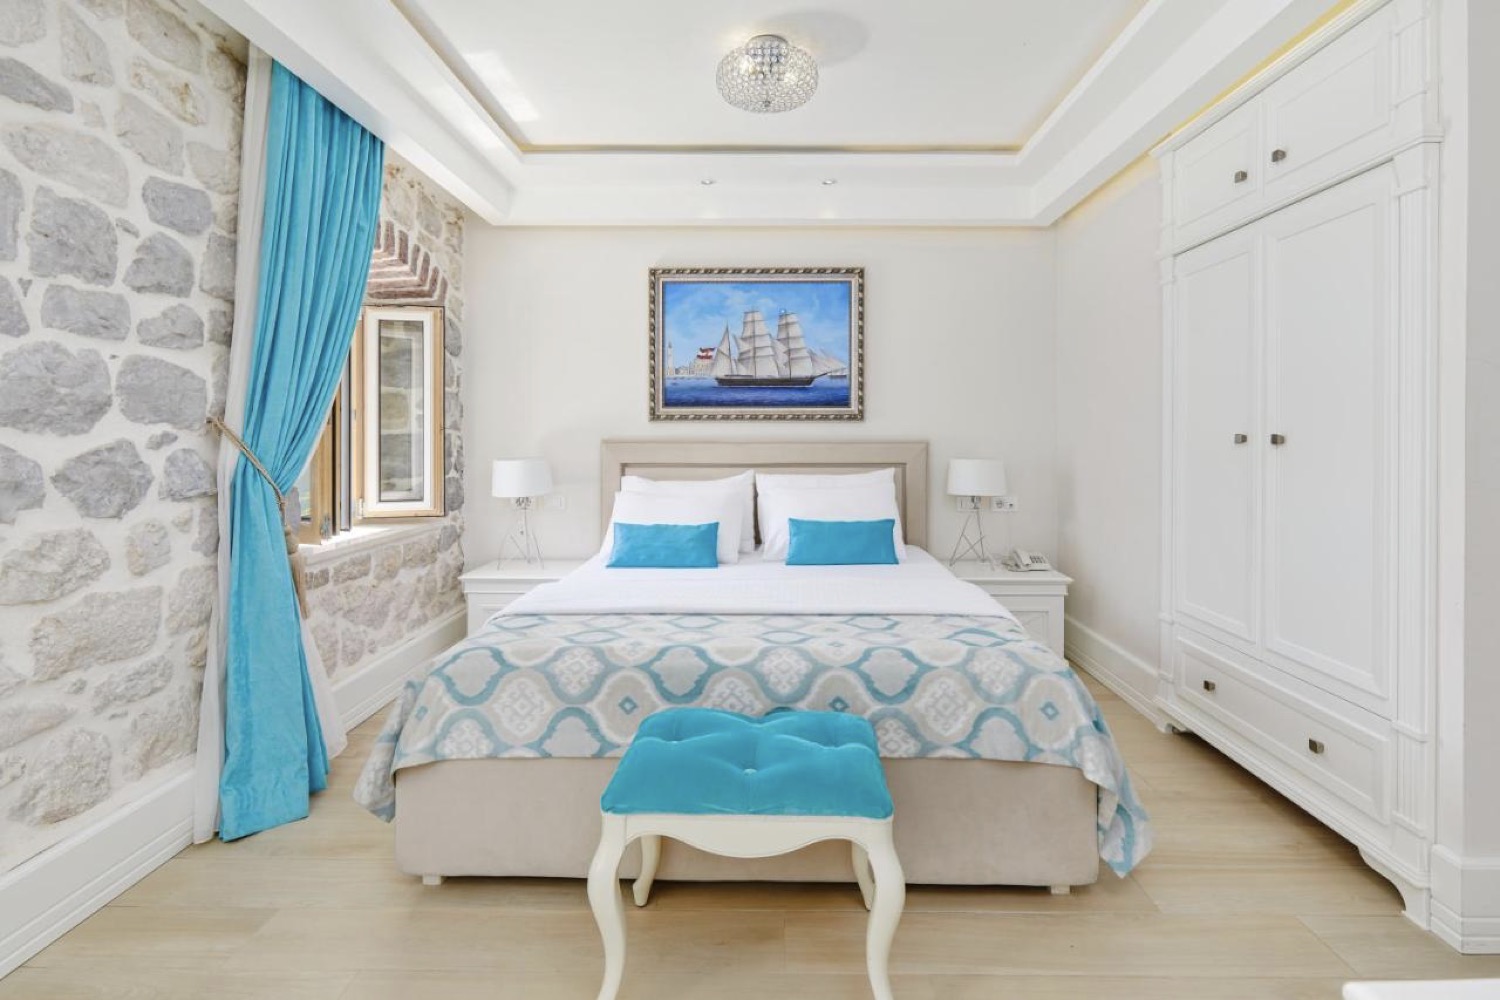 Rekomendowane hotele w Zatoce Kotorskiej.